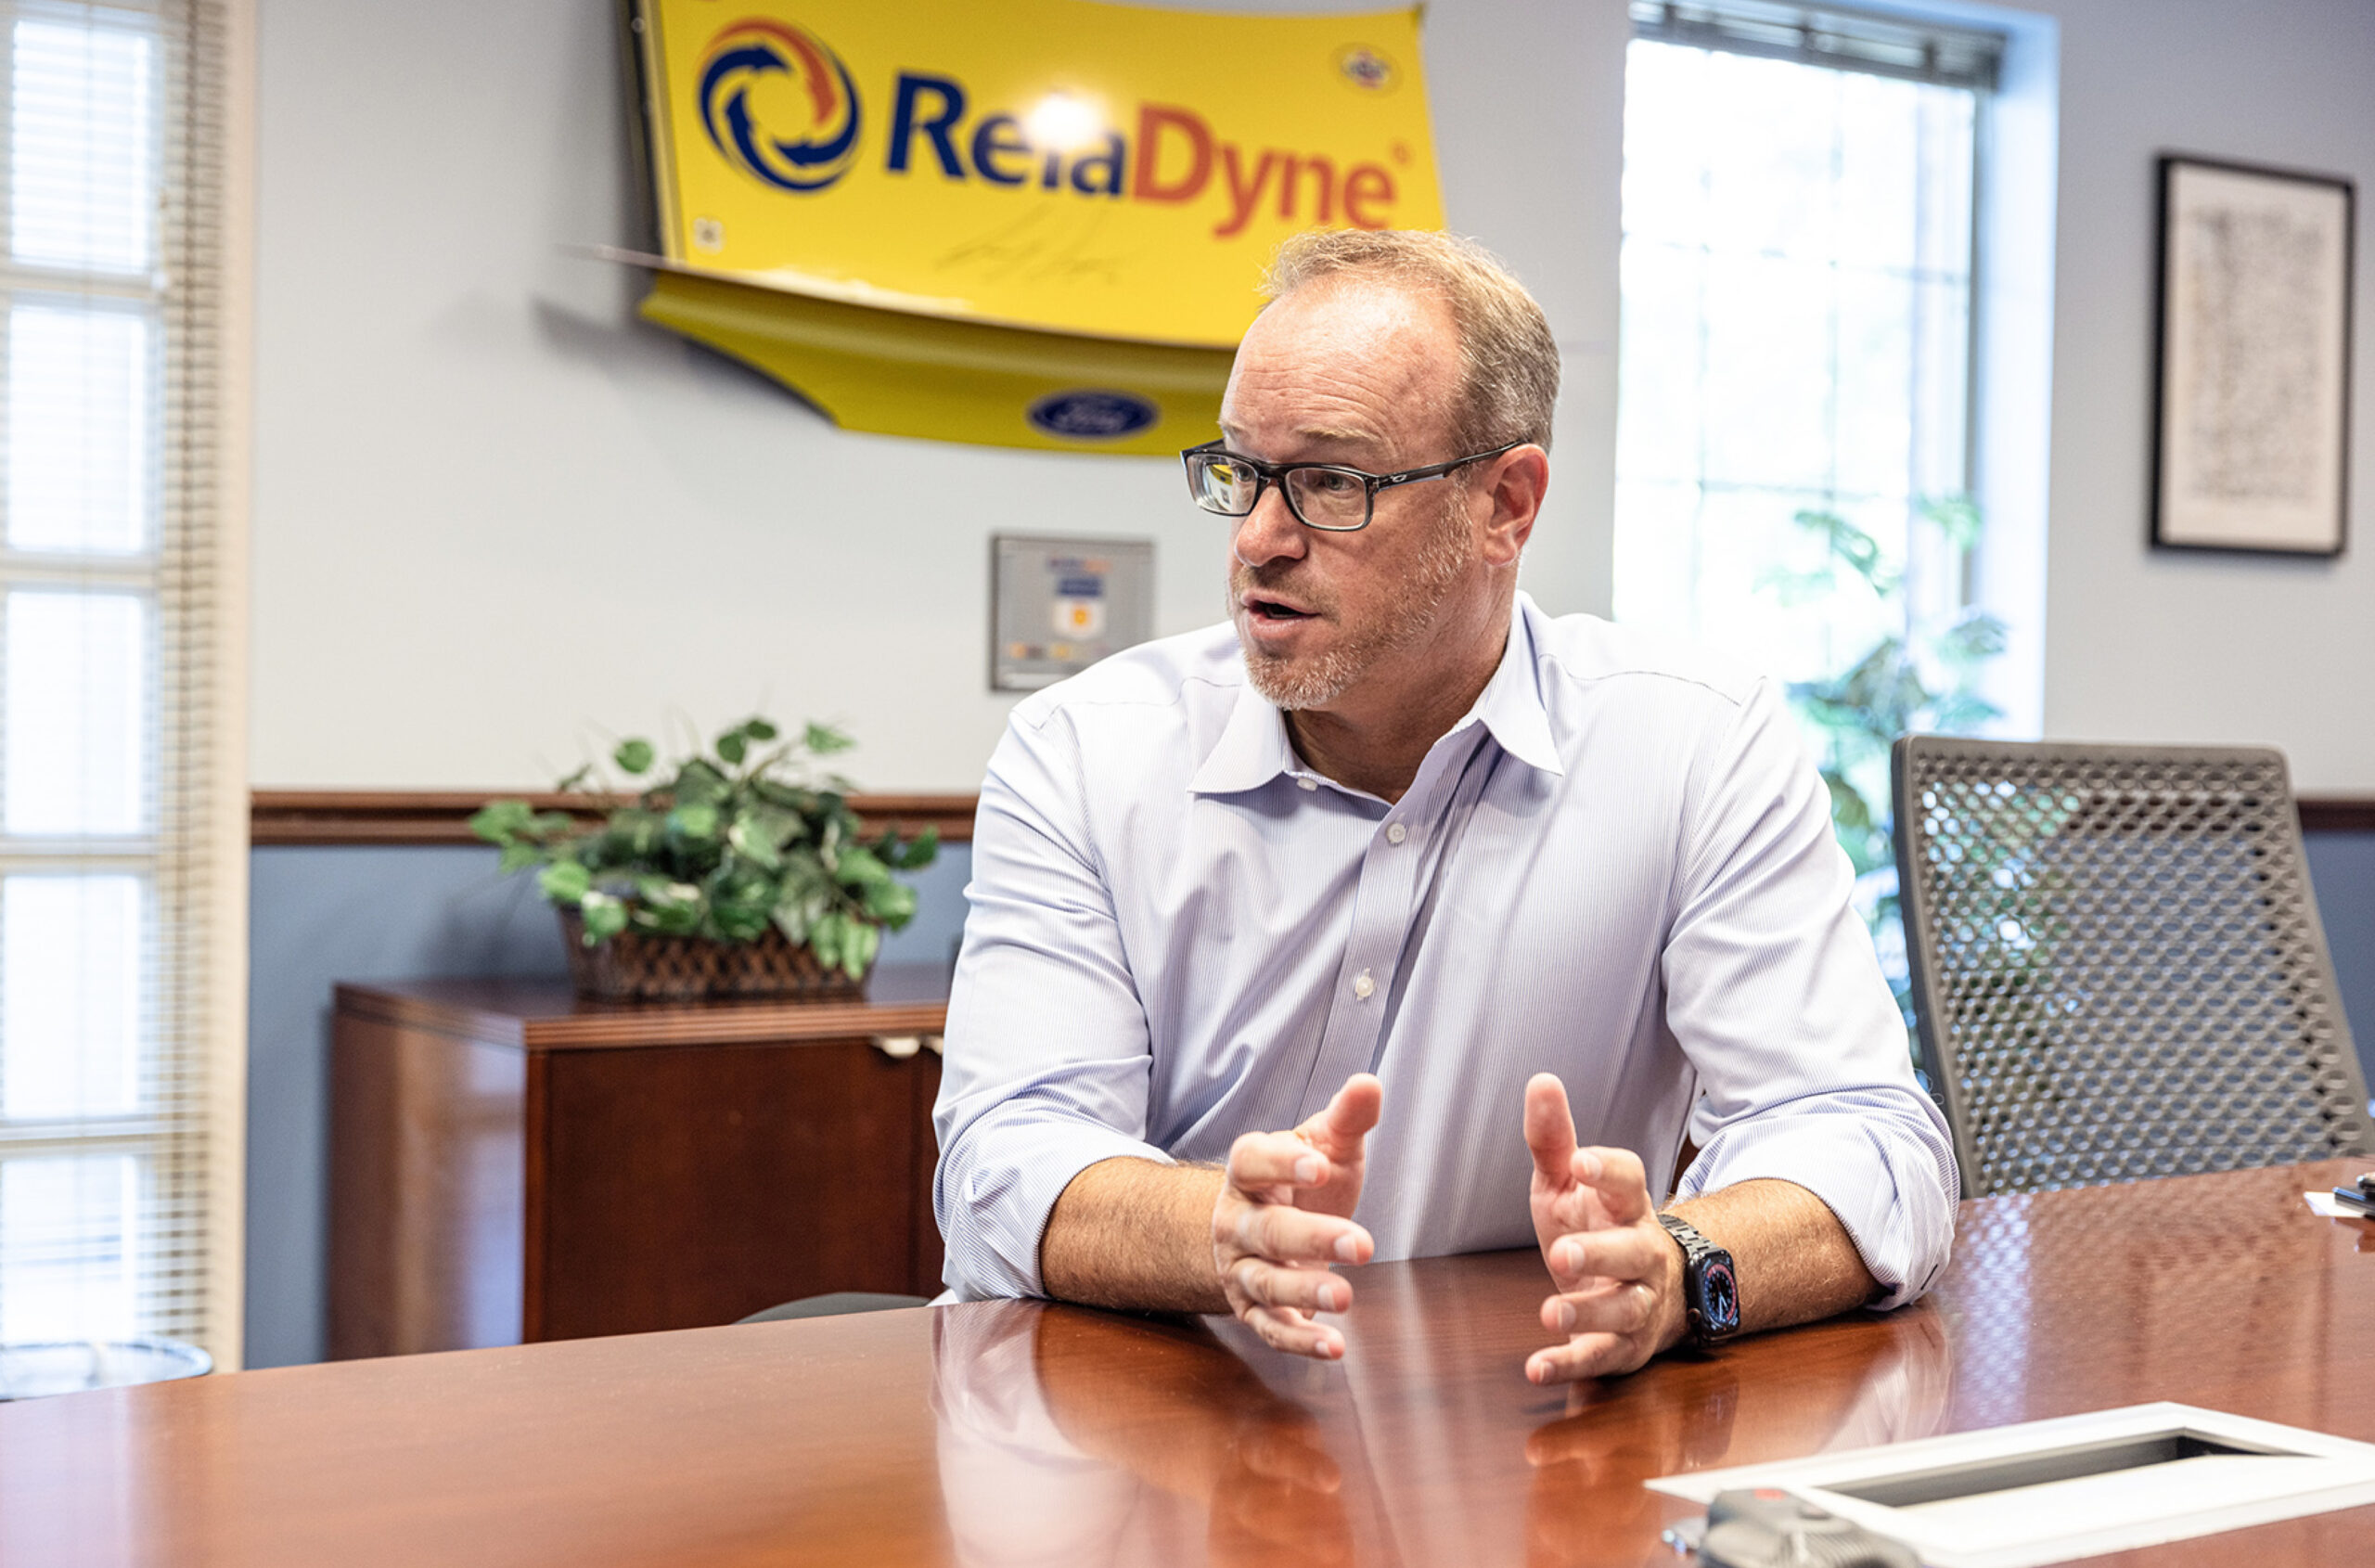 RelaDyne Executive VP of Marketing and E-Commerce Dan Oehler